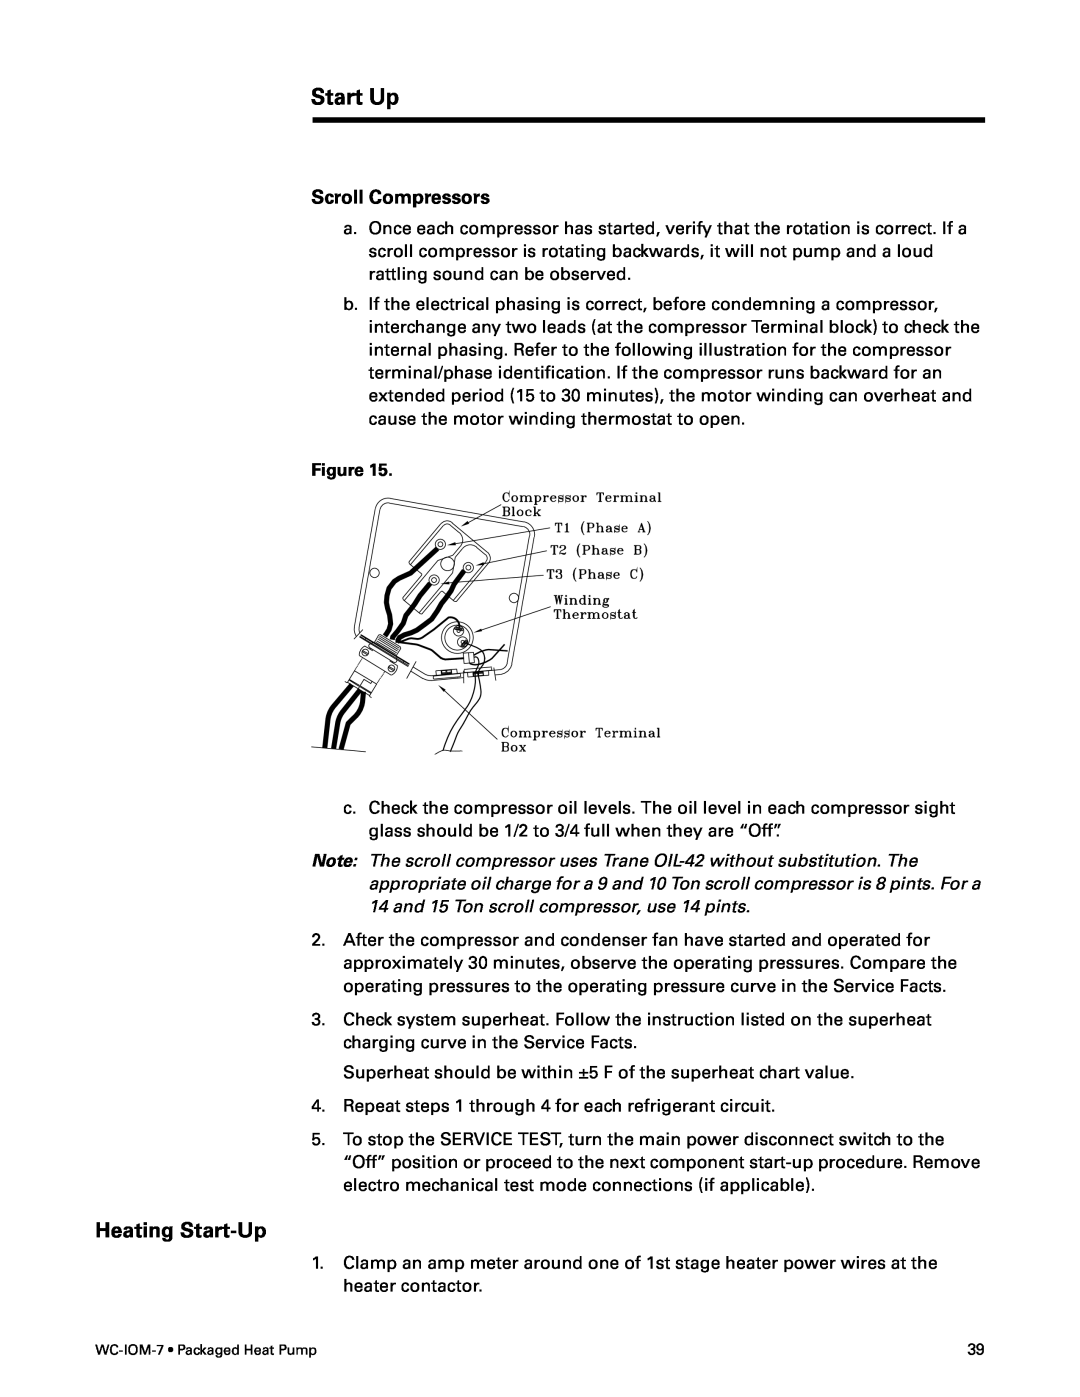 Trane WC-IOM-7 manual Start Up, Heating Start-Up, Scroll Compressors 